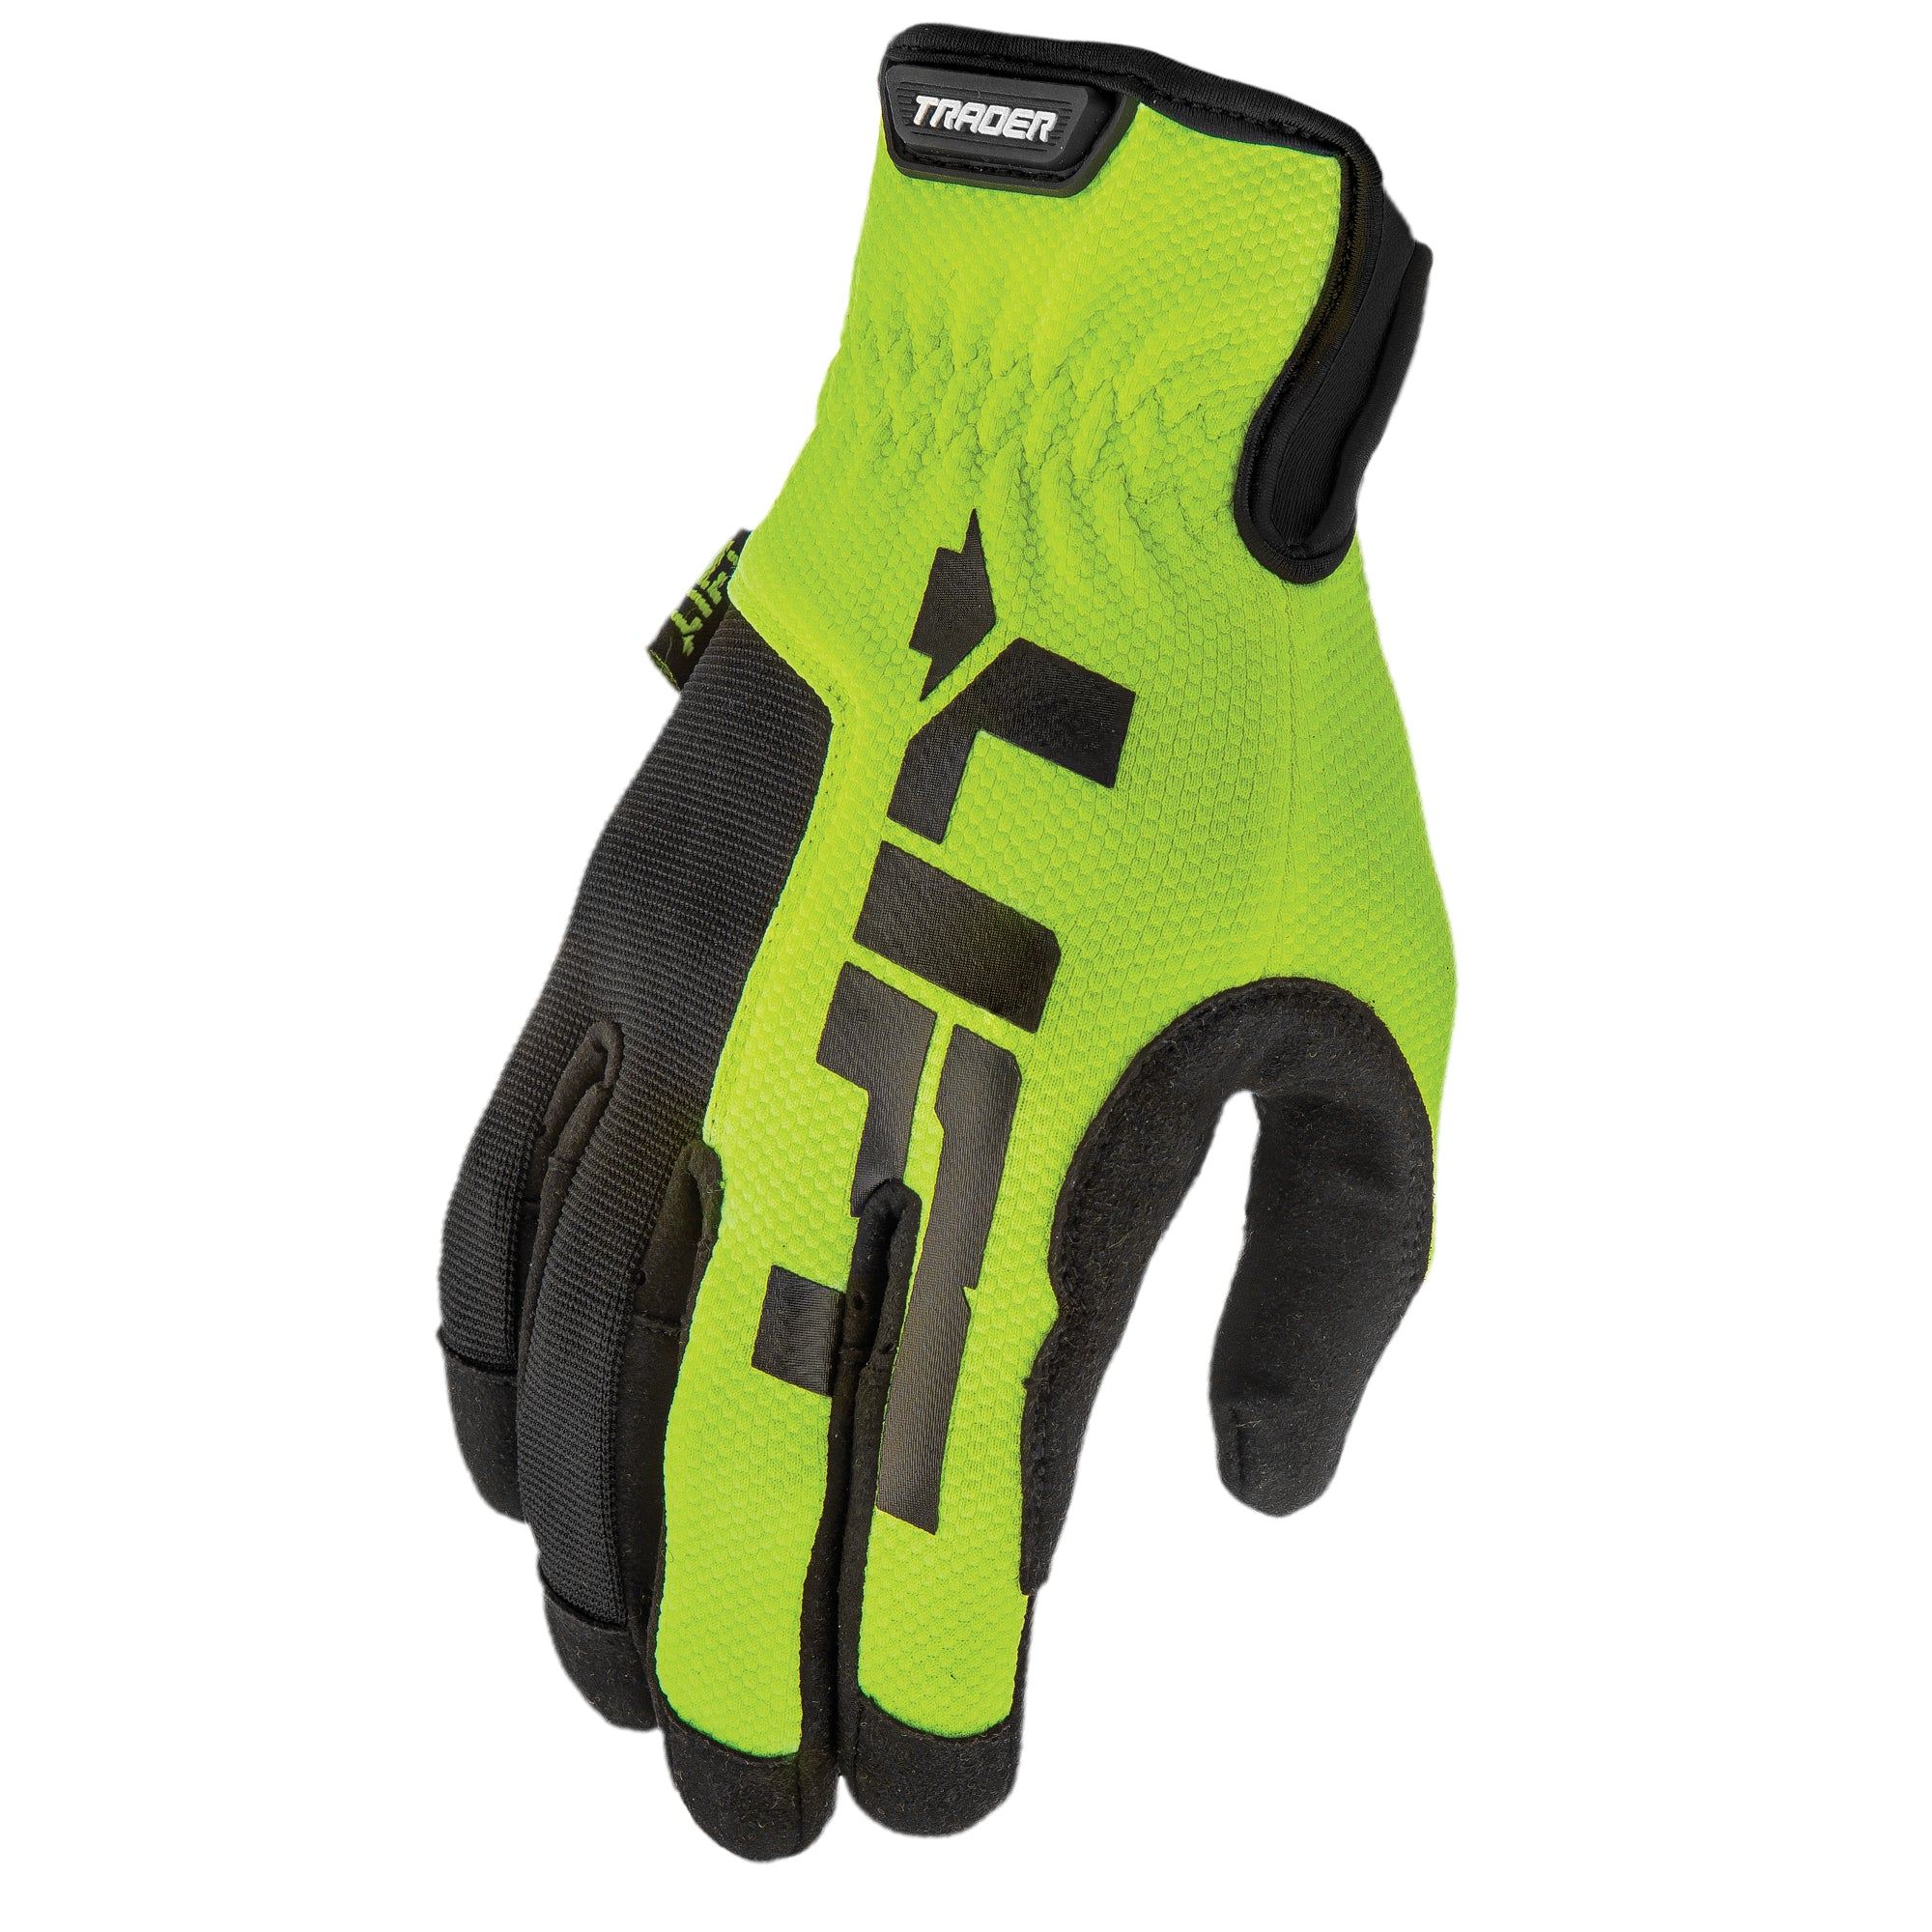 LIFT Safety - Trader Glove (Hi-Viz)